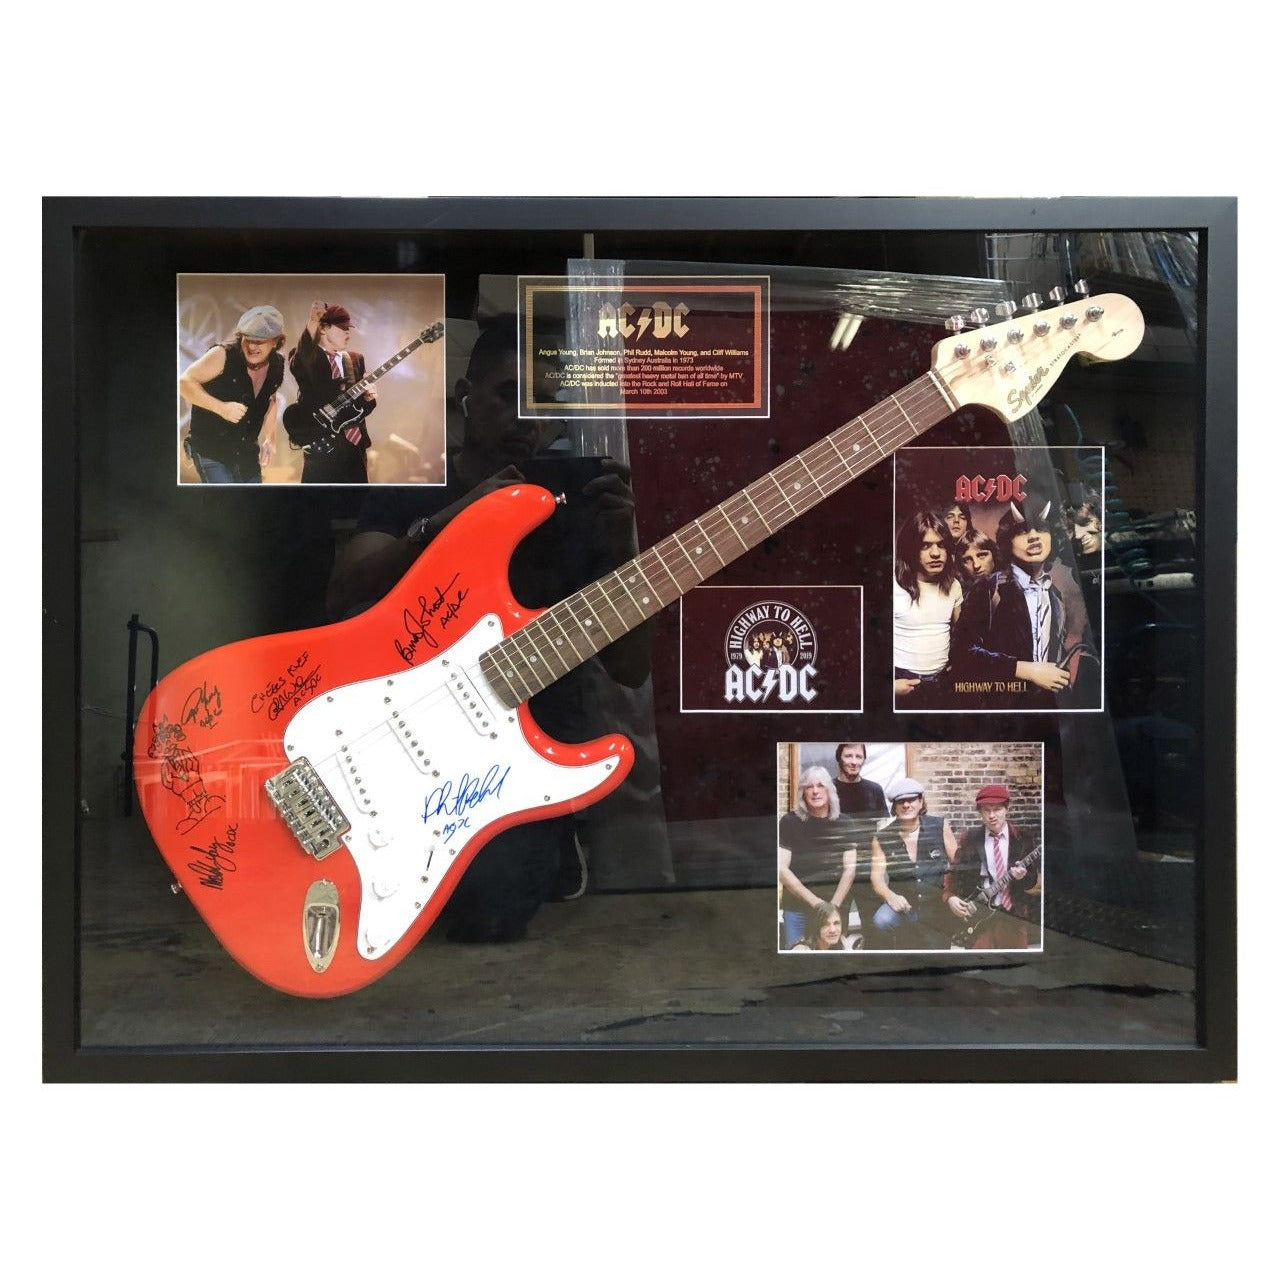 Travis Barker Tom DeLonge Blink-182 full size Stratocaster electric guitar signed with proof